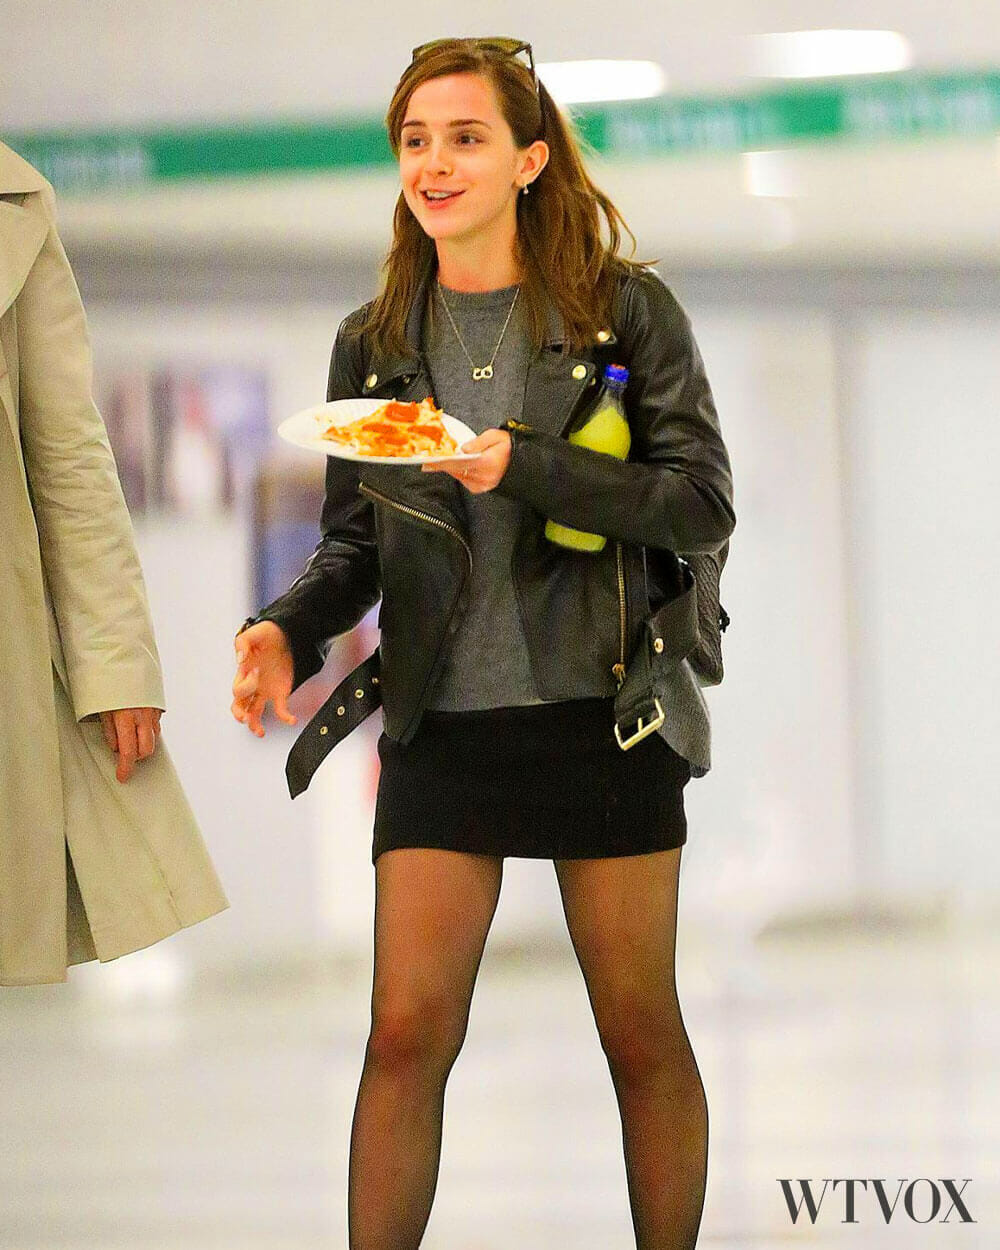 Emma Watson Eating Pizza